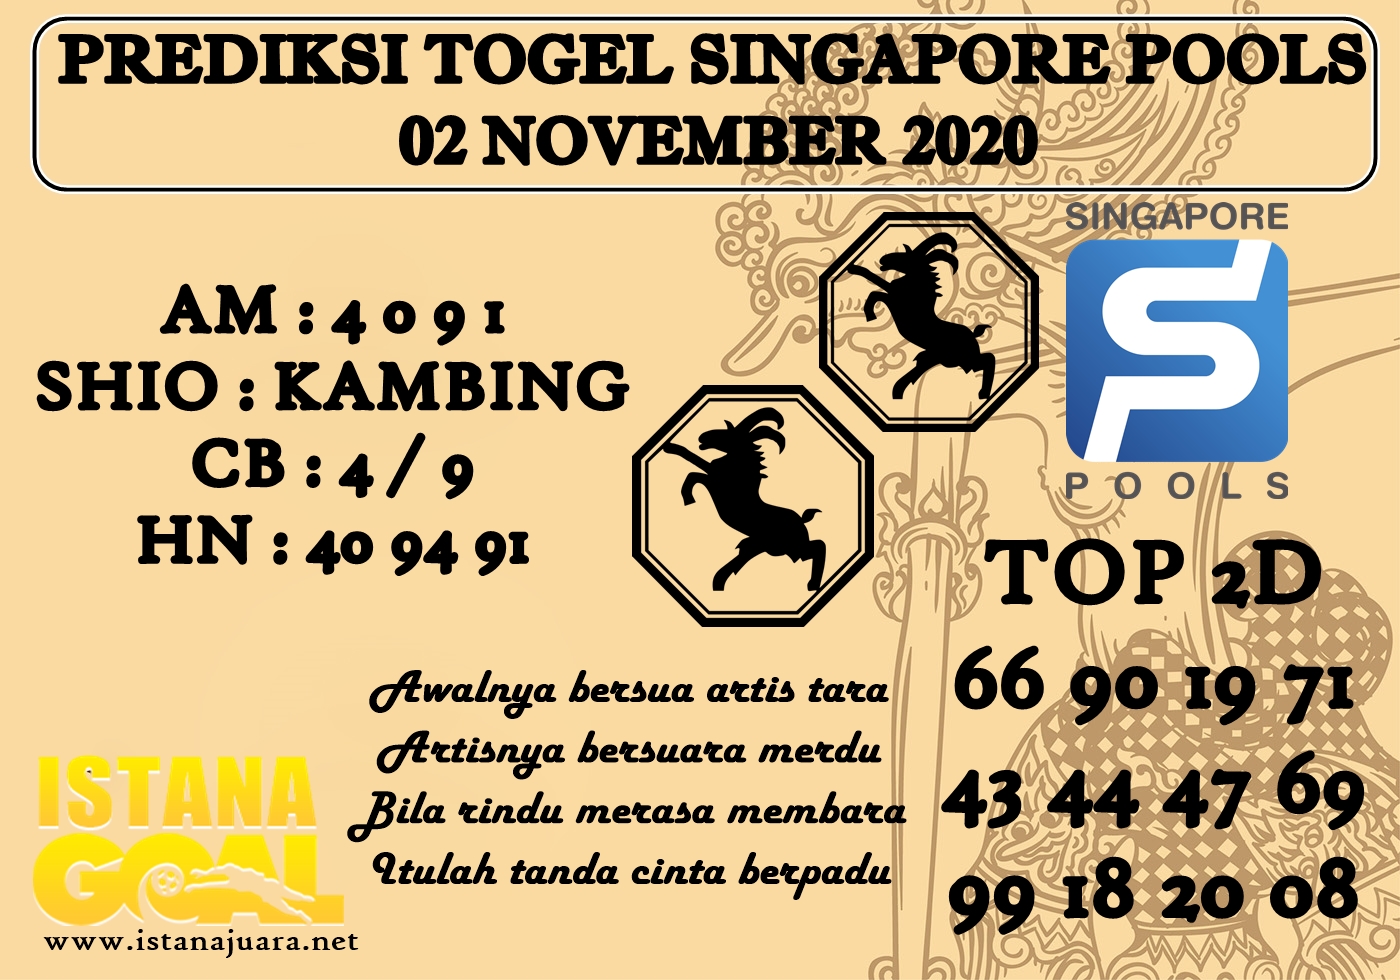 PREDIKSI TOGEL SINGAPORE POOLS 02 NOVEMBER 2020